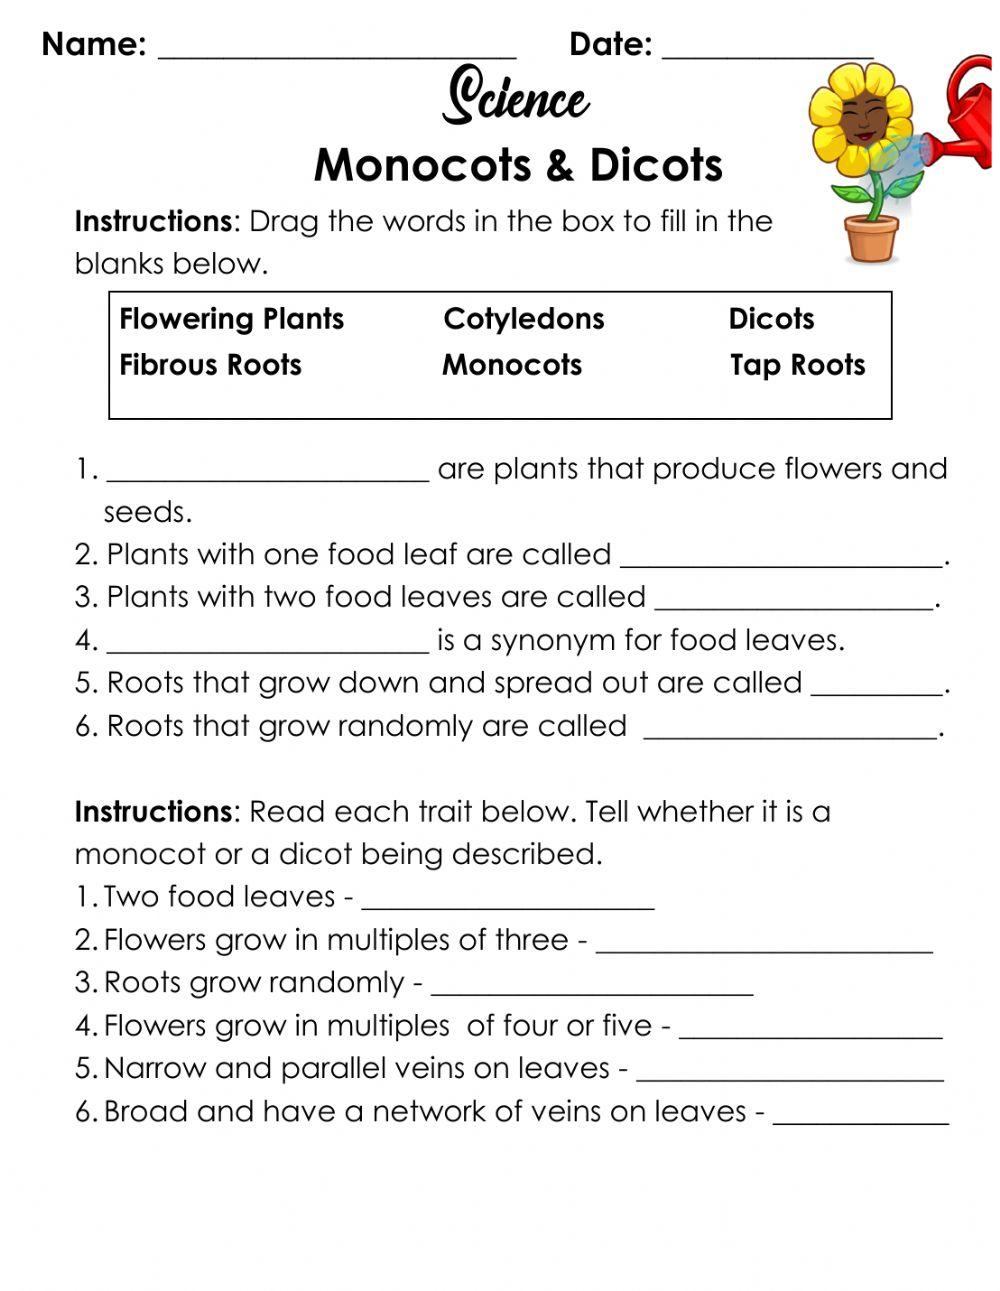 Monocots & Dicots